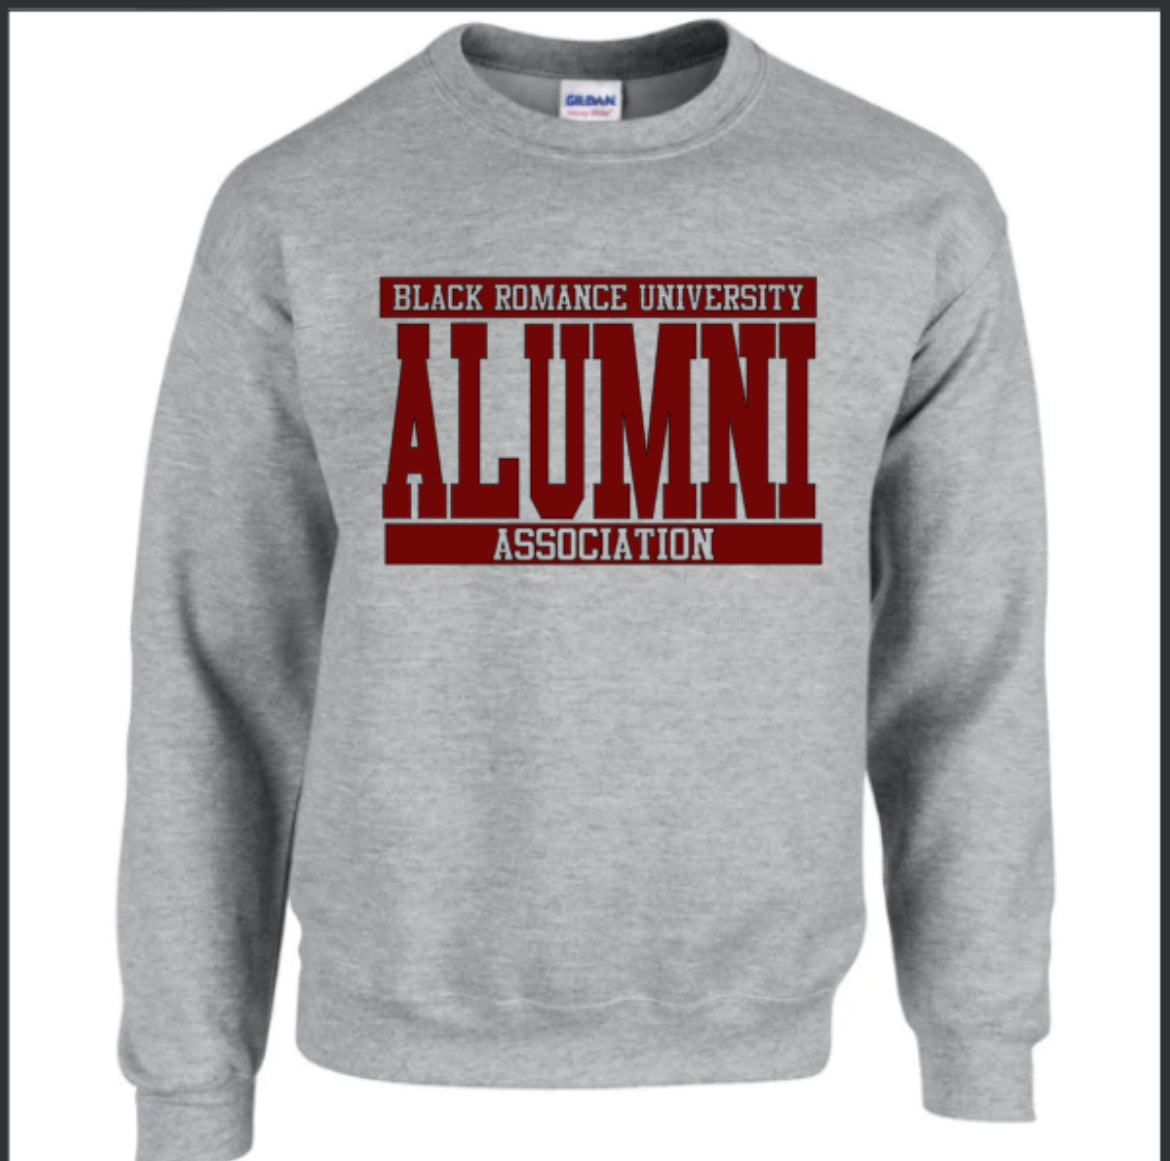 Black Romance University Alumni Association